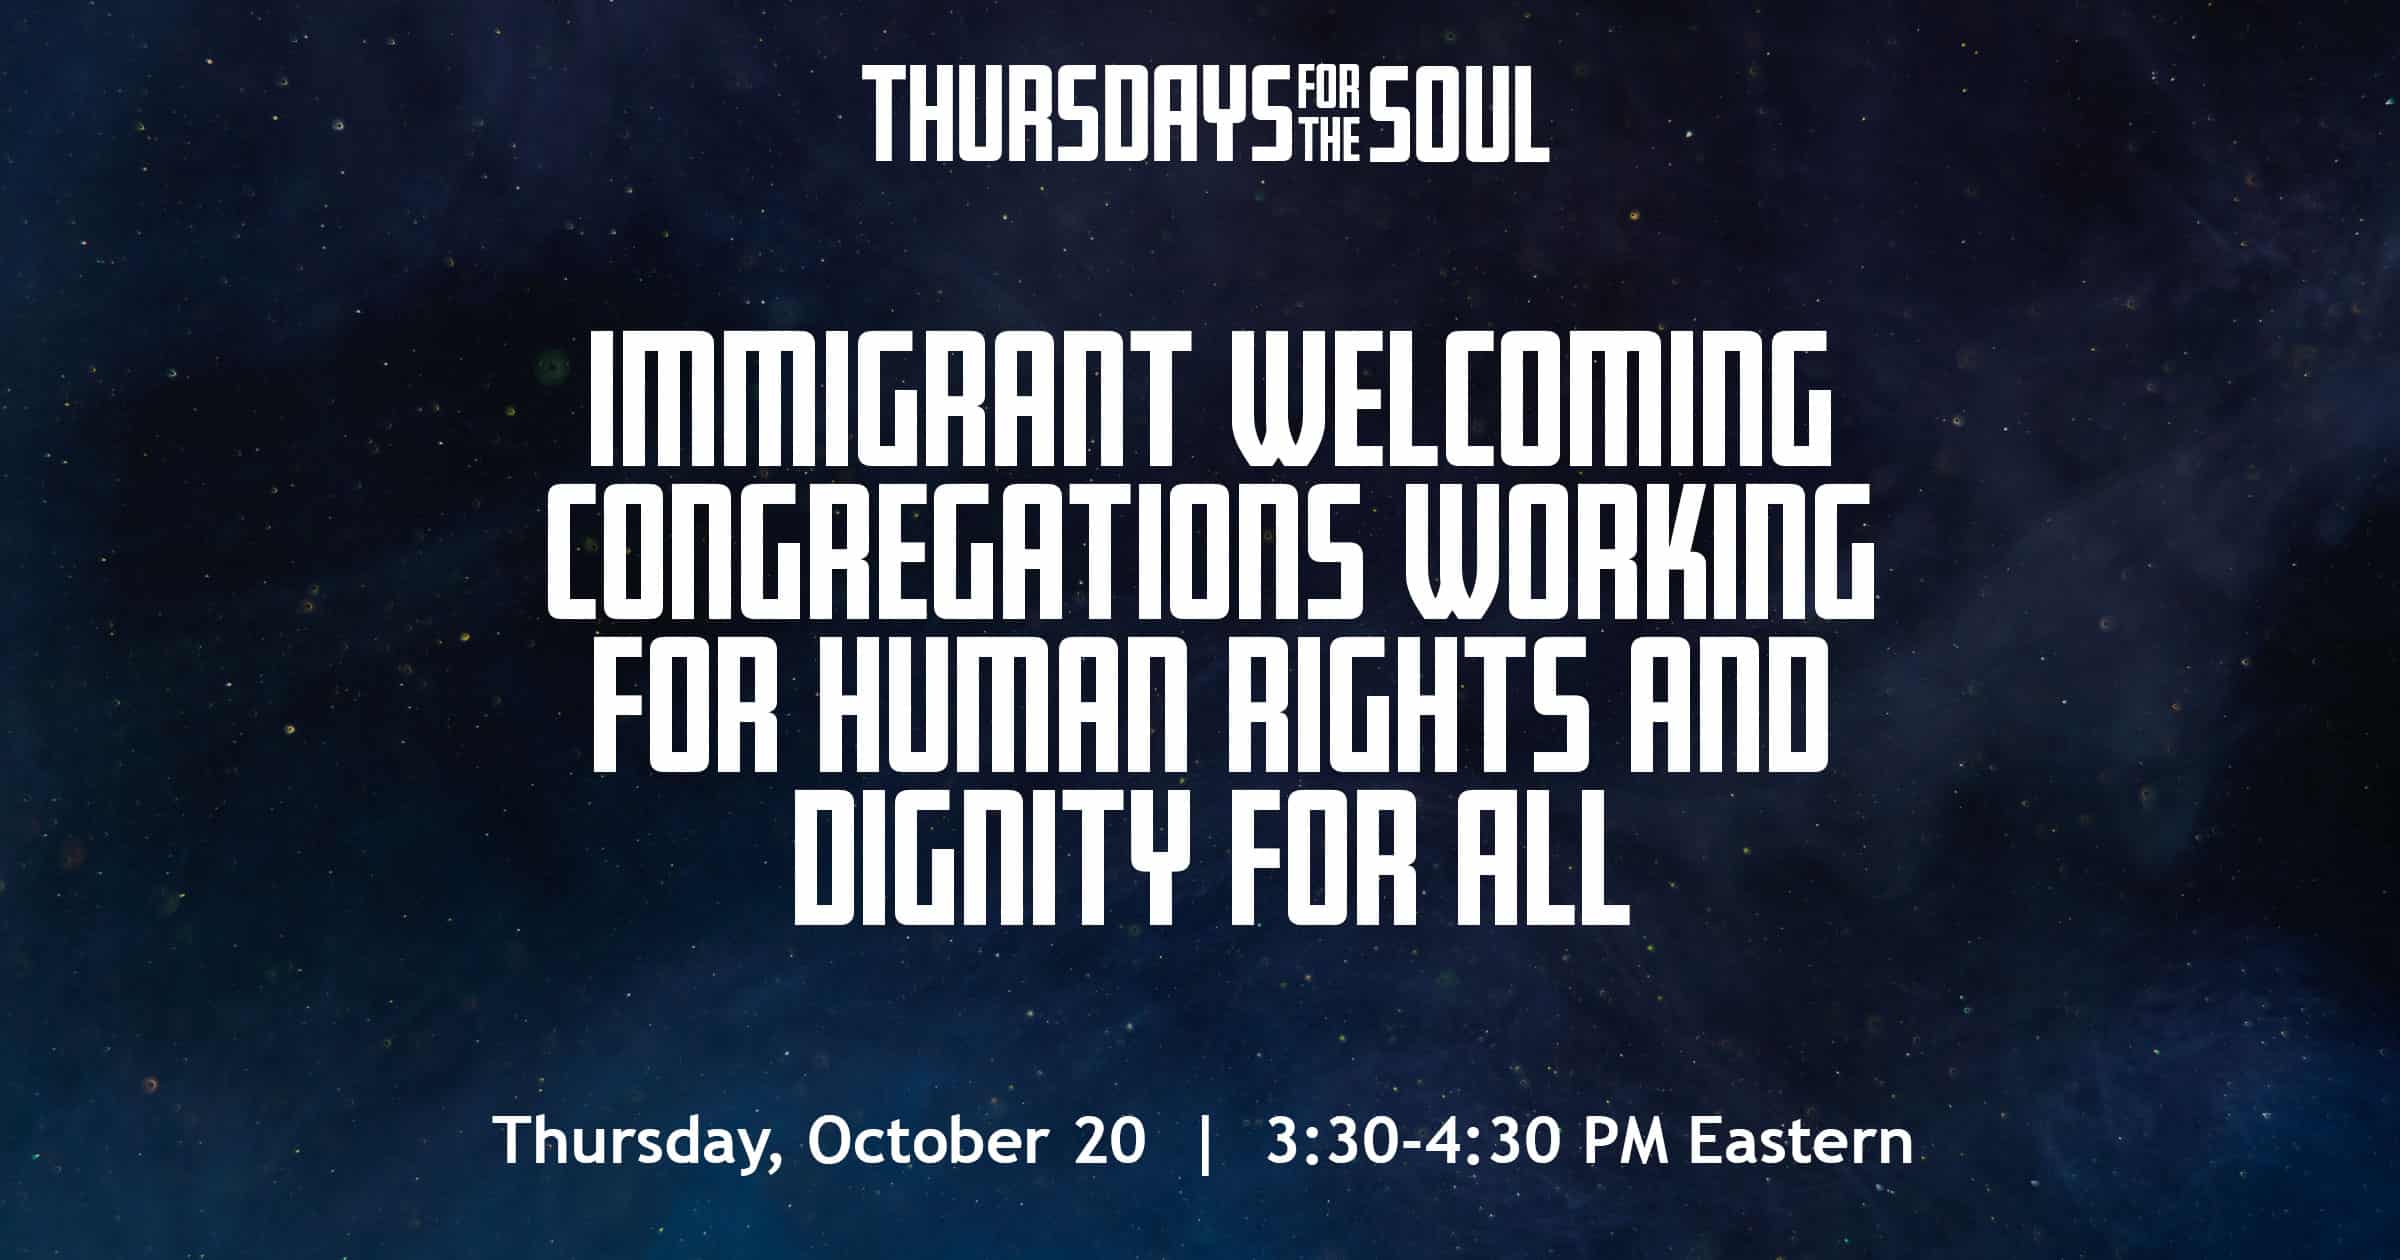 ImmigrantWelcomingCongregations-ThursdaysfortheSoul